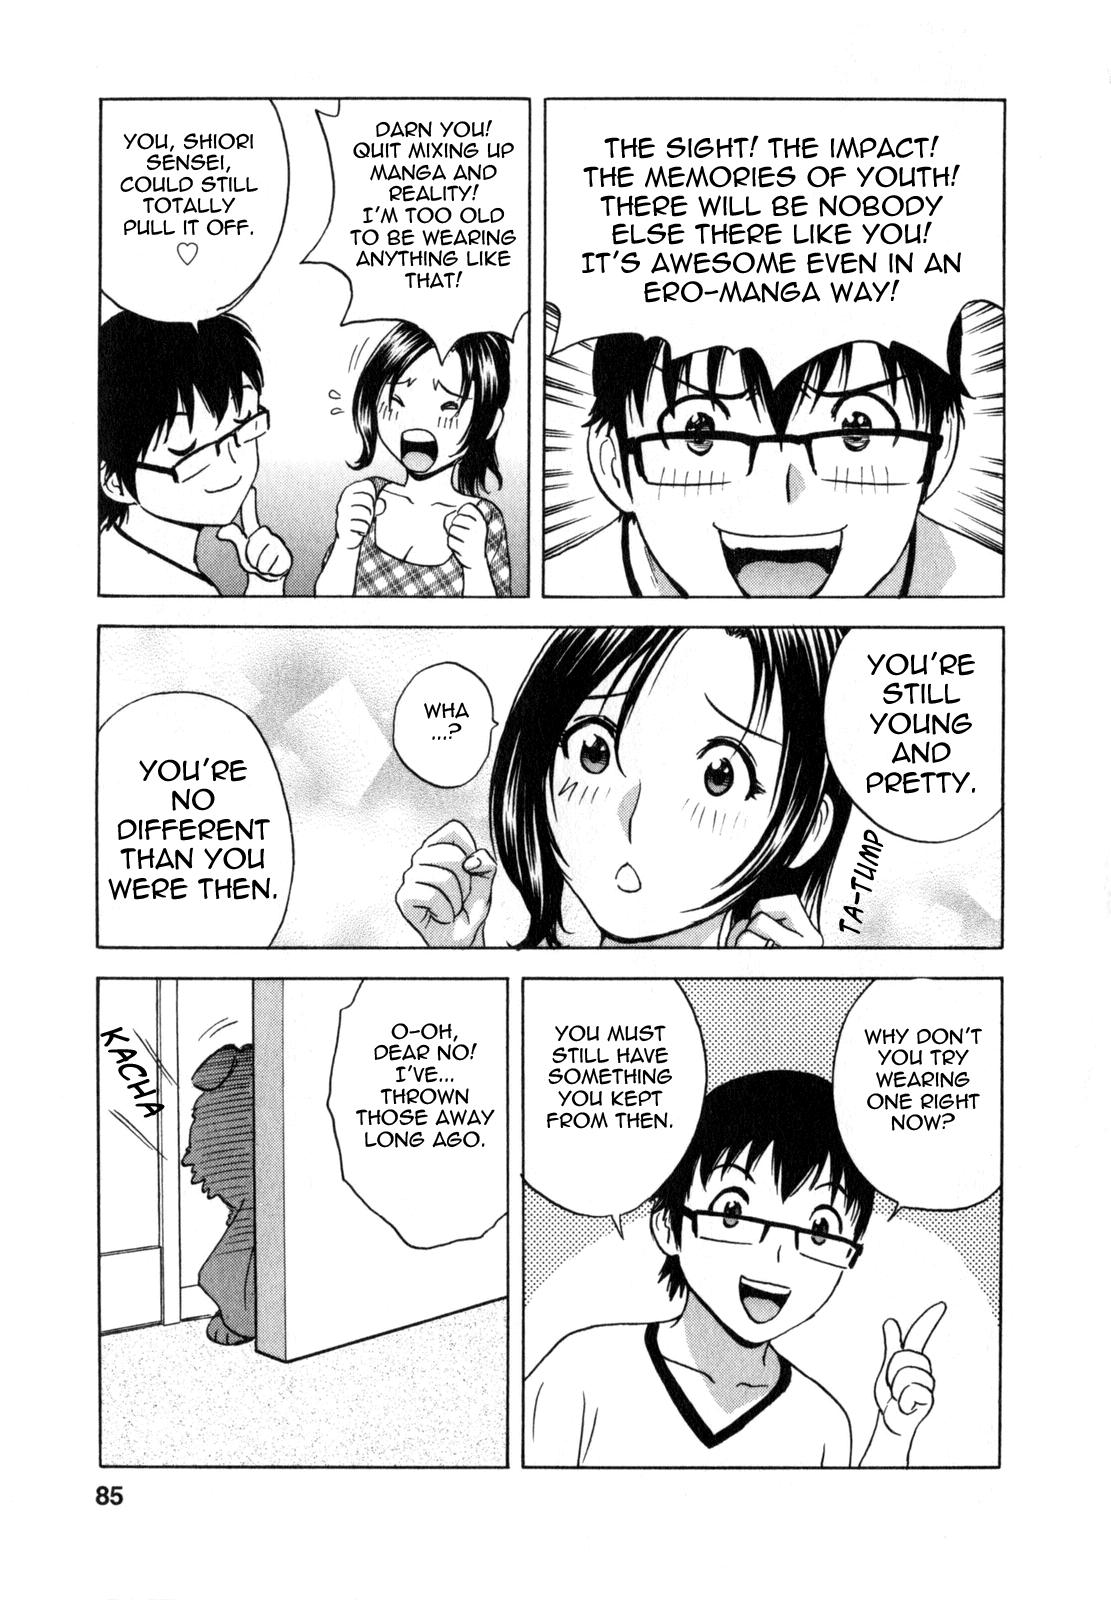 [Hidemaru] Life with Married Women Just Like a Manga 1 - Ch. 1-7 [English] {Tadanohito} 89